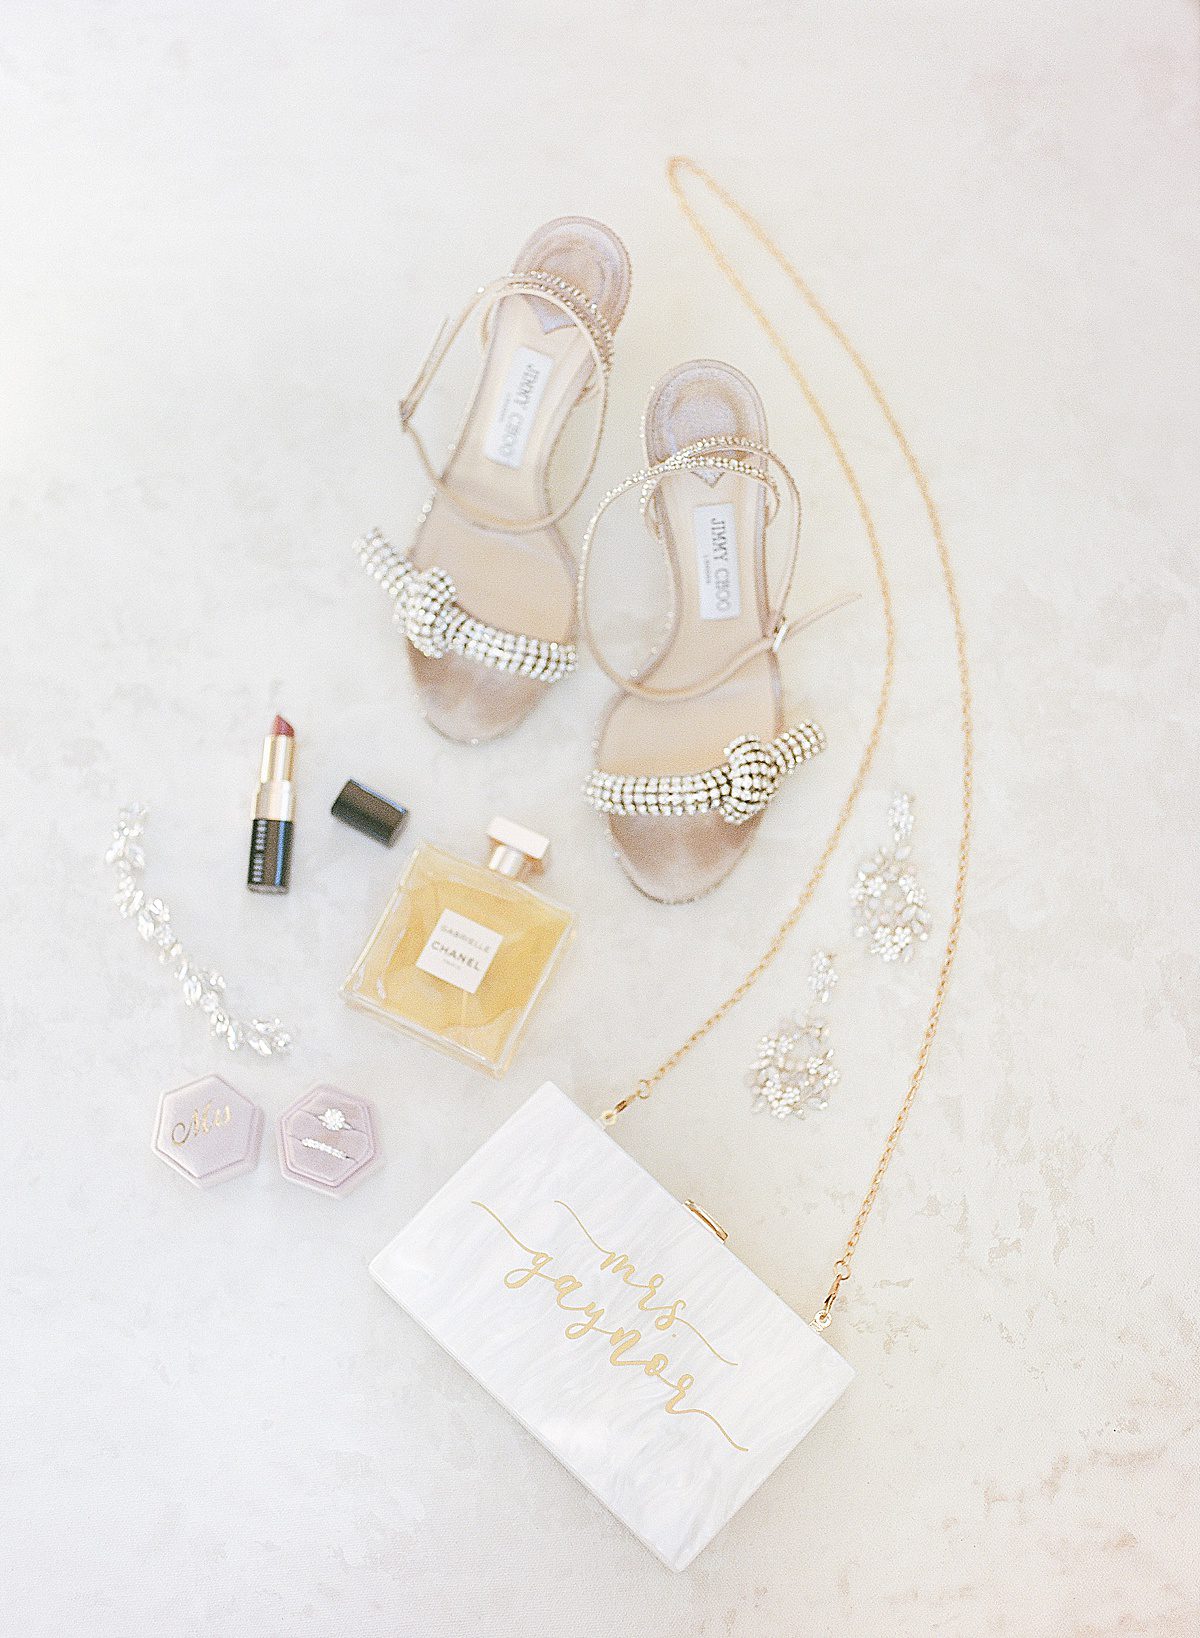 Bridal Details Shoes Lipstick Ring Perfume Photo